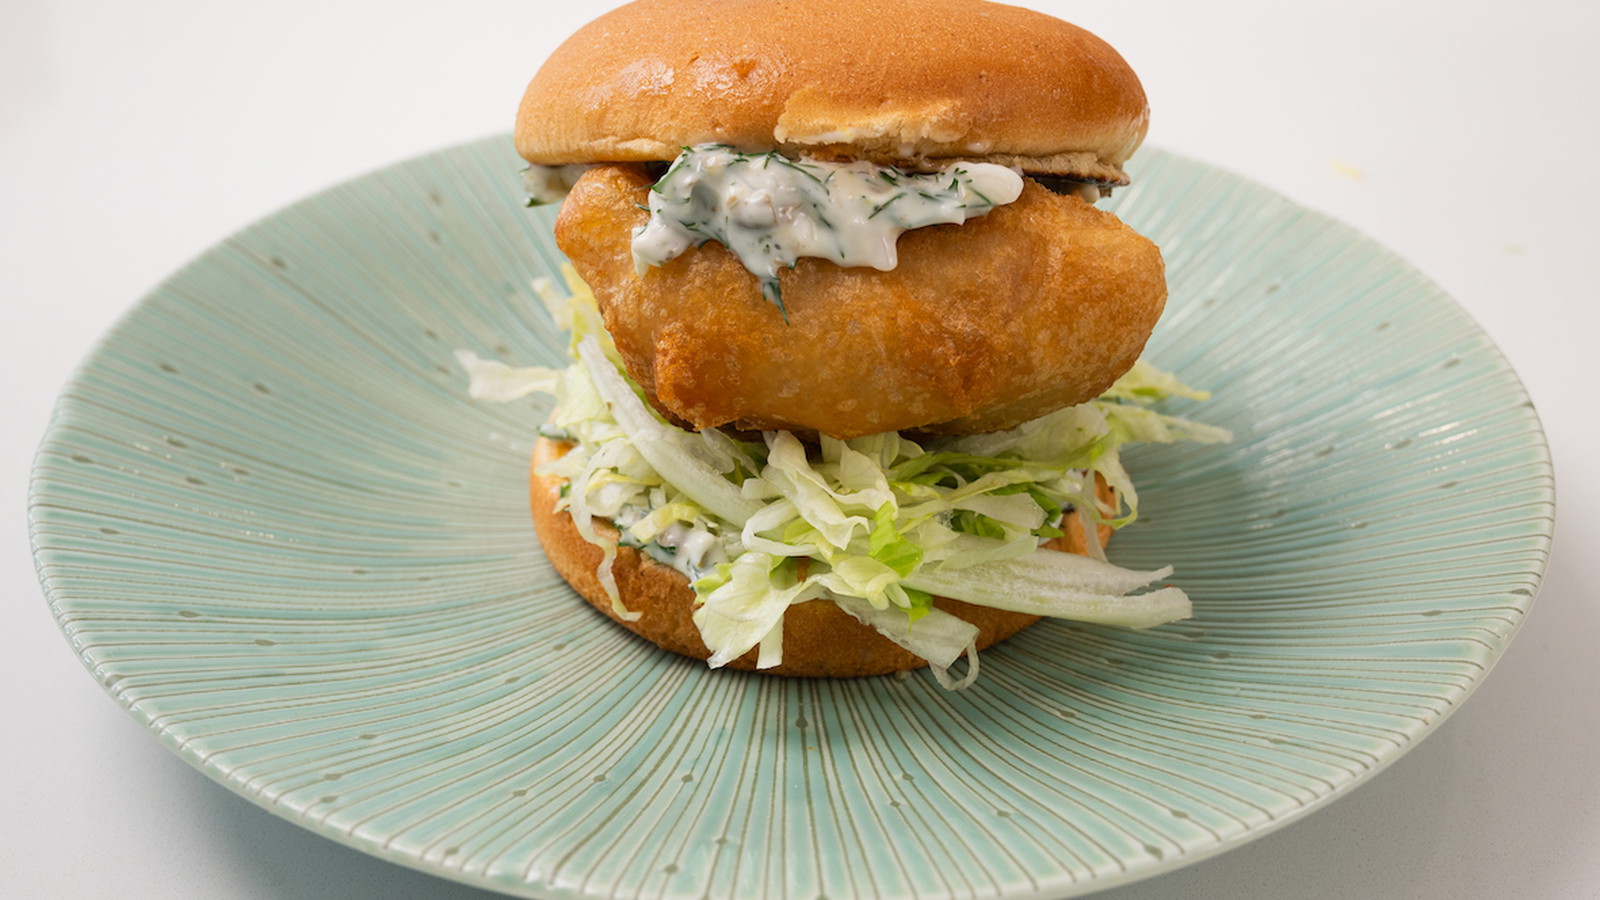 Image of Fried fish sandwich